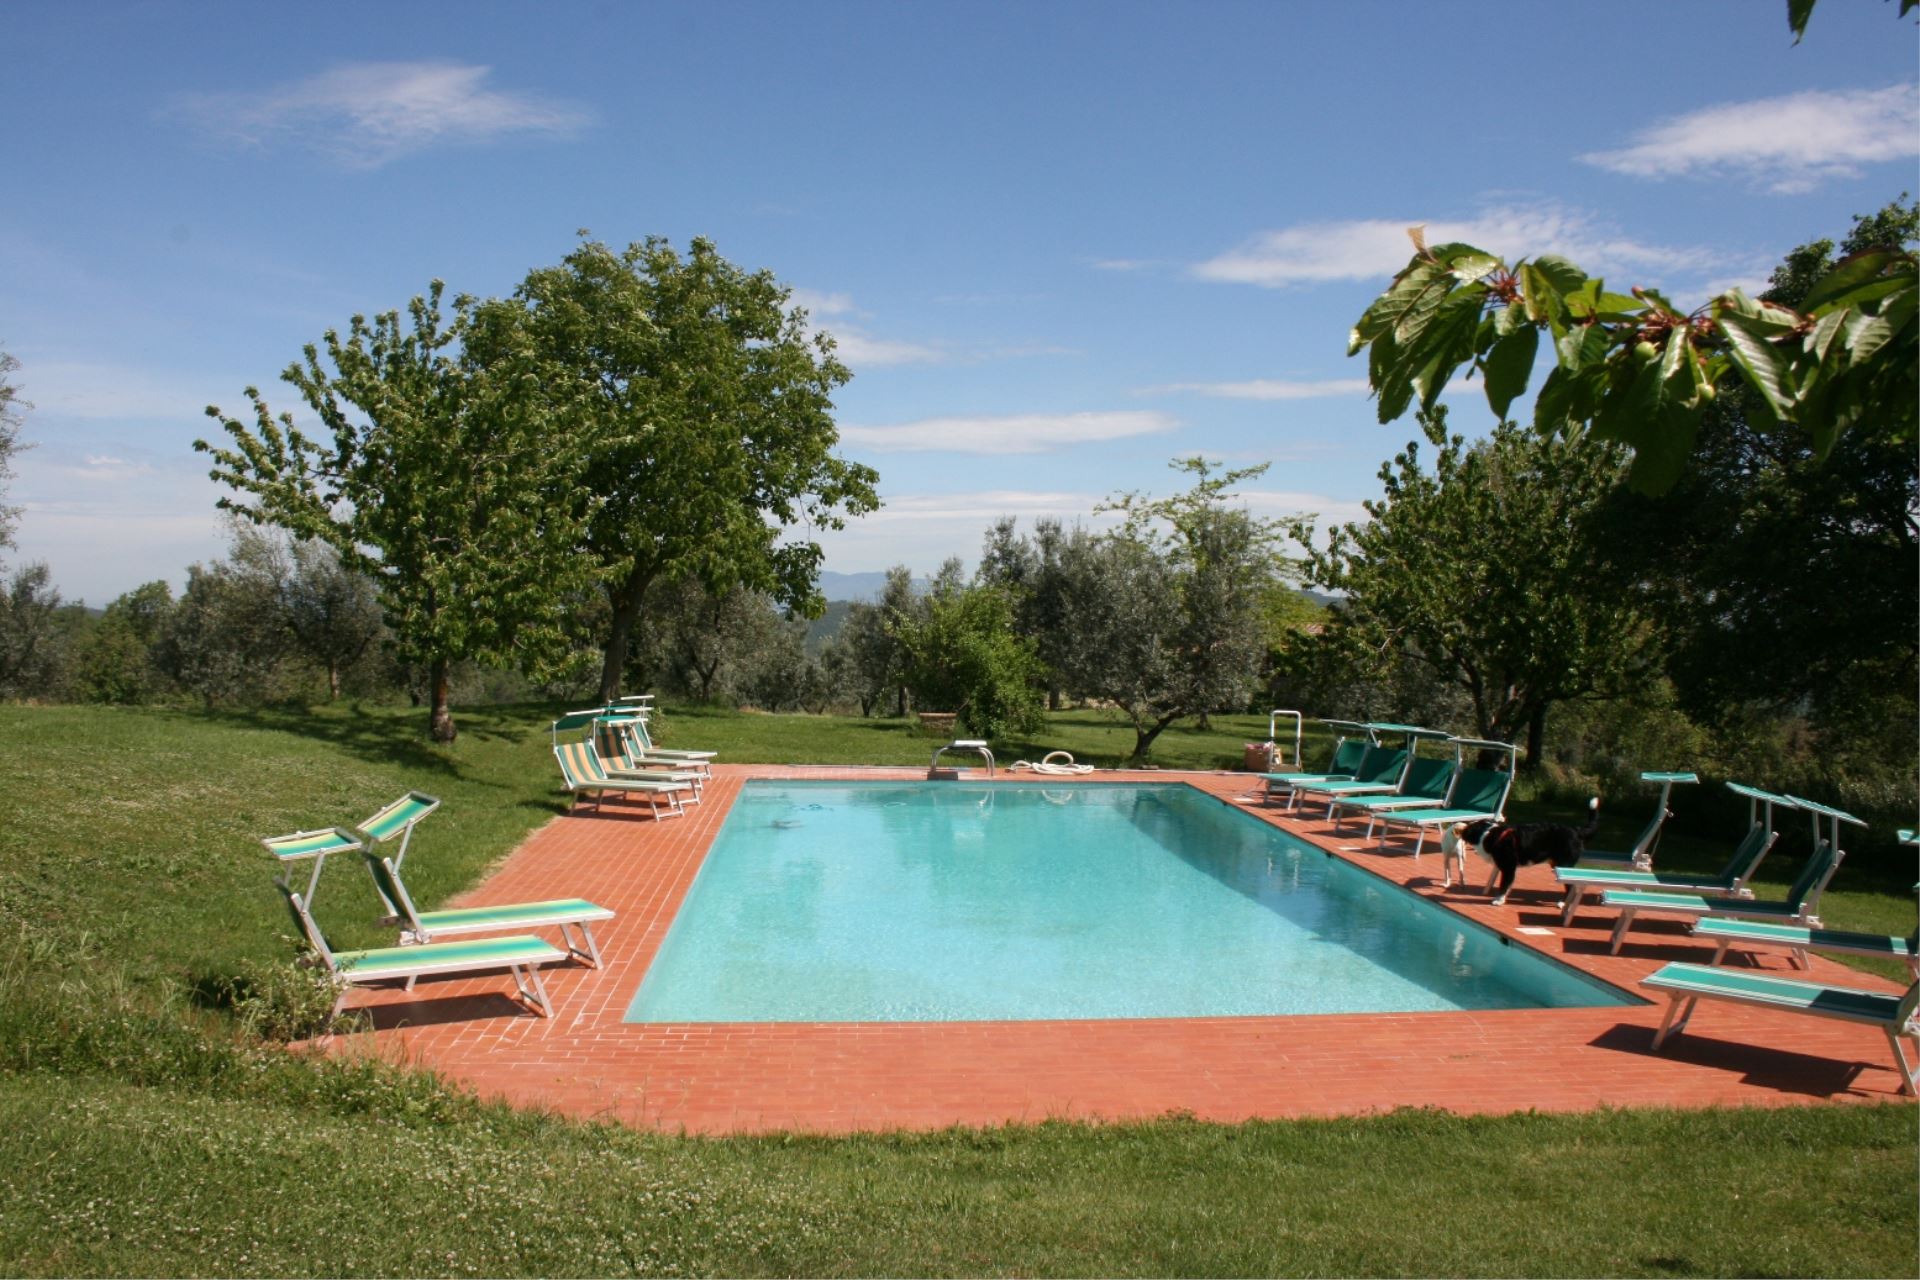 456_9fb6163_Agriturismo Bevignano, Arezzo Siena, zwembad, tennisbaan, olijfolie, kindvriendelijk (6)